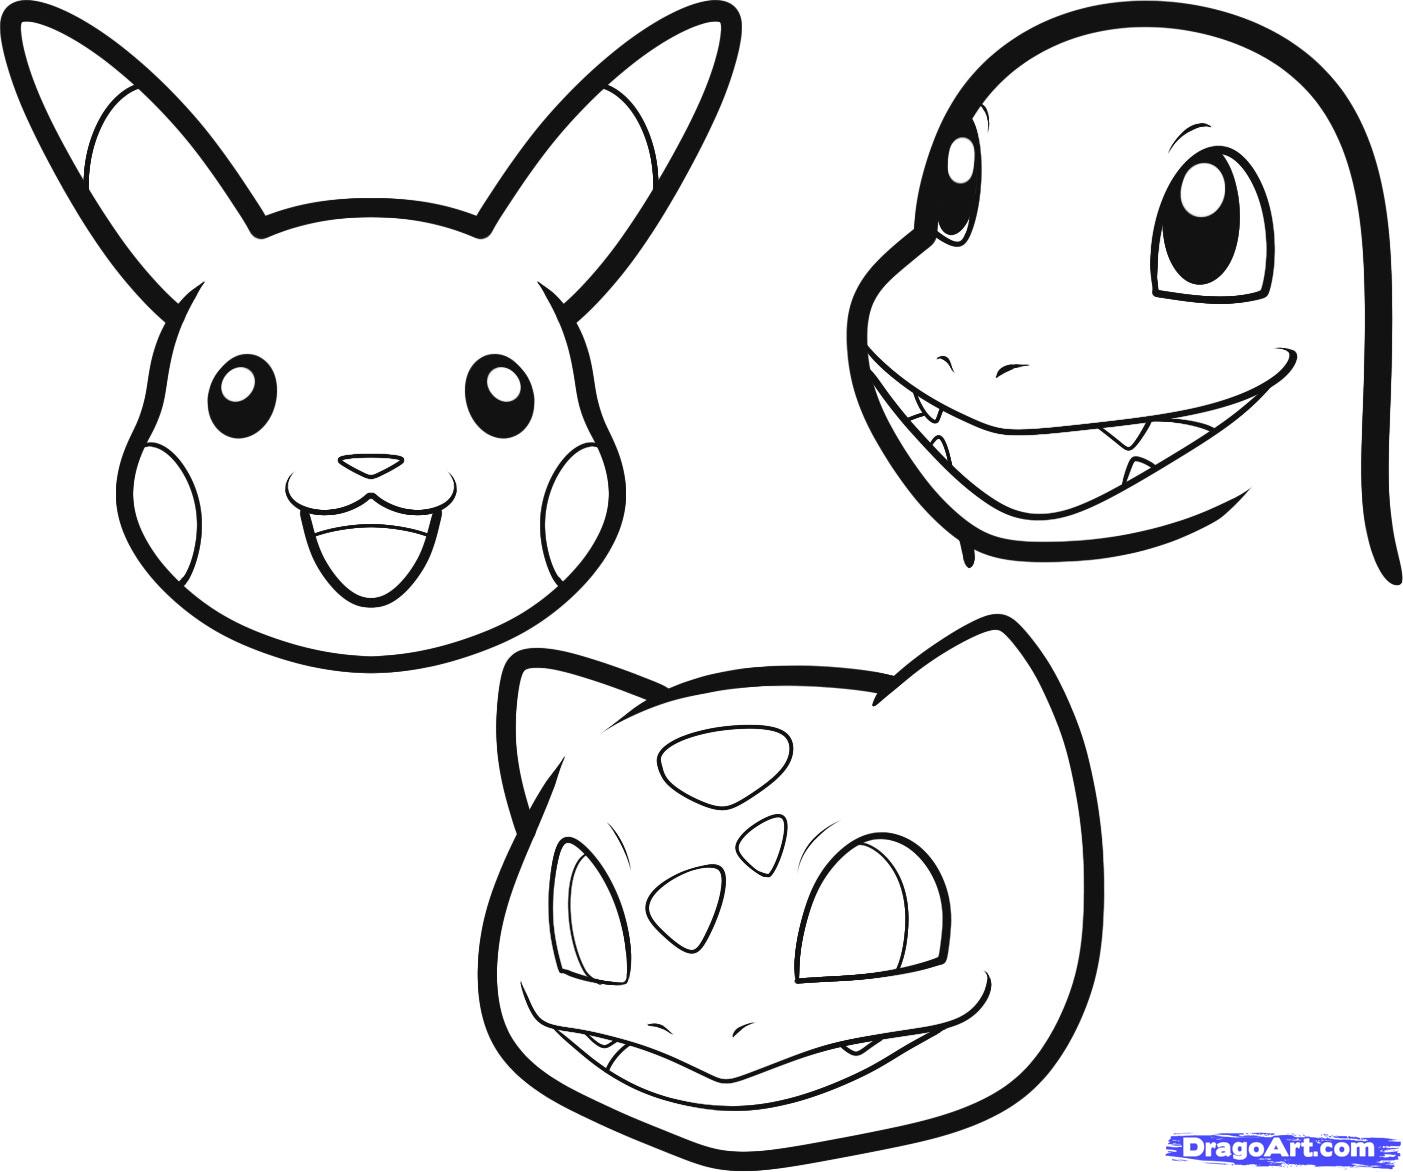 How To Draw Pokemon - YouTube